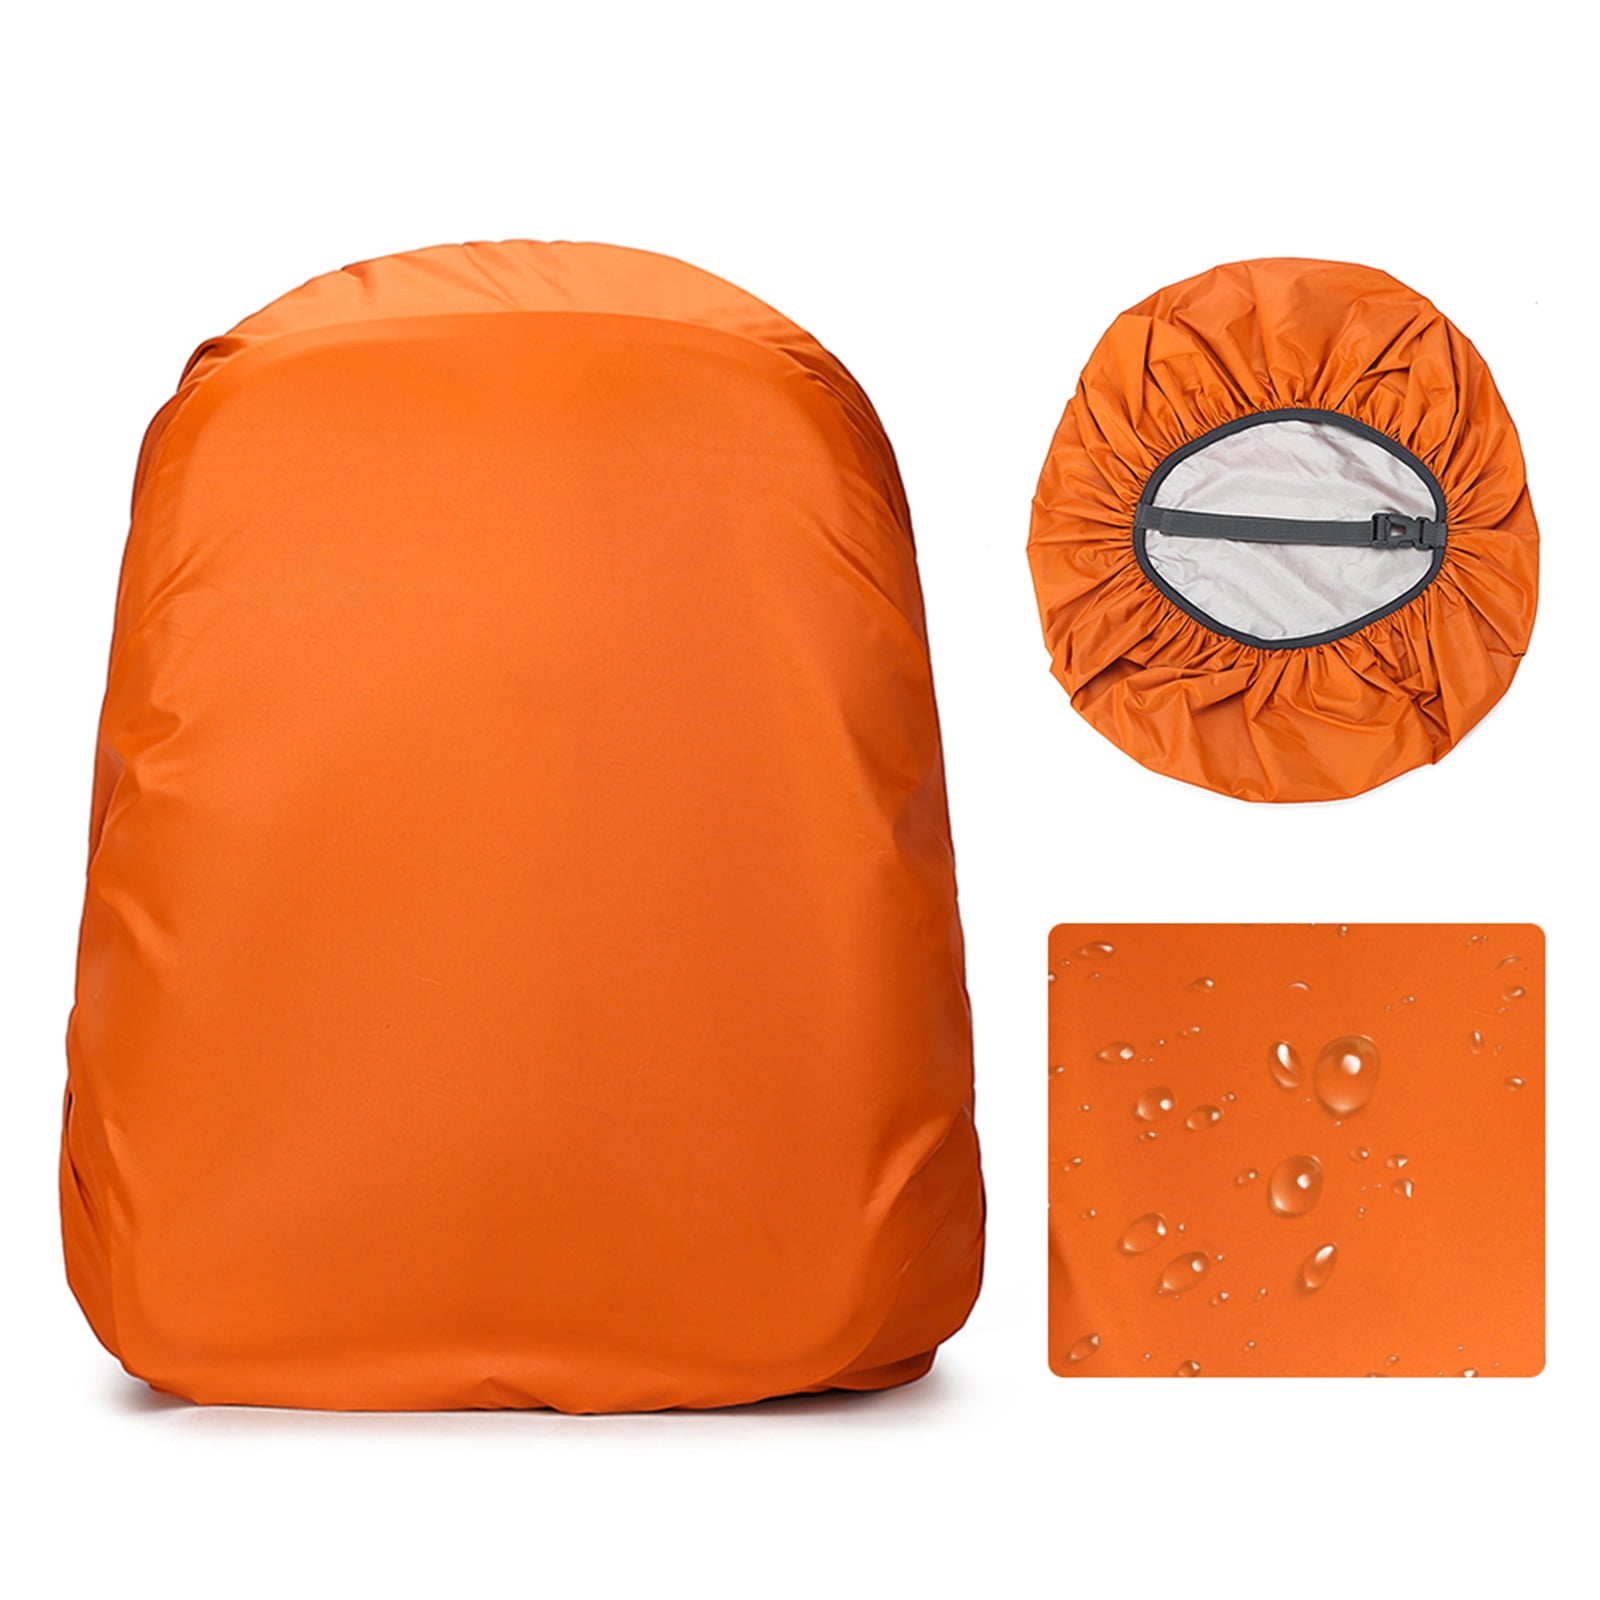 Details about   Backpack Rain Cover Waterproof Rain Camping Dustproof Mountaineering Bag 